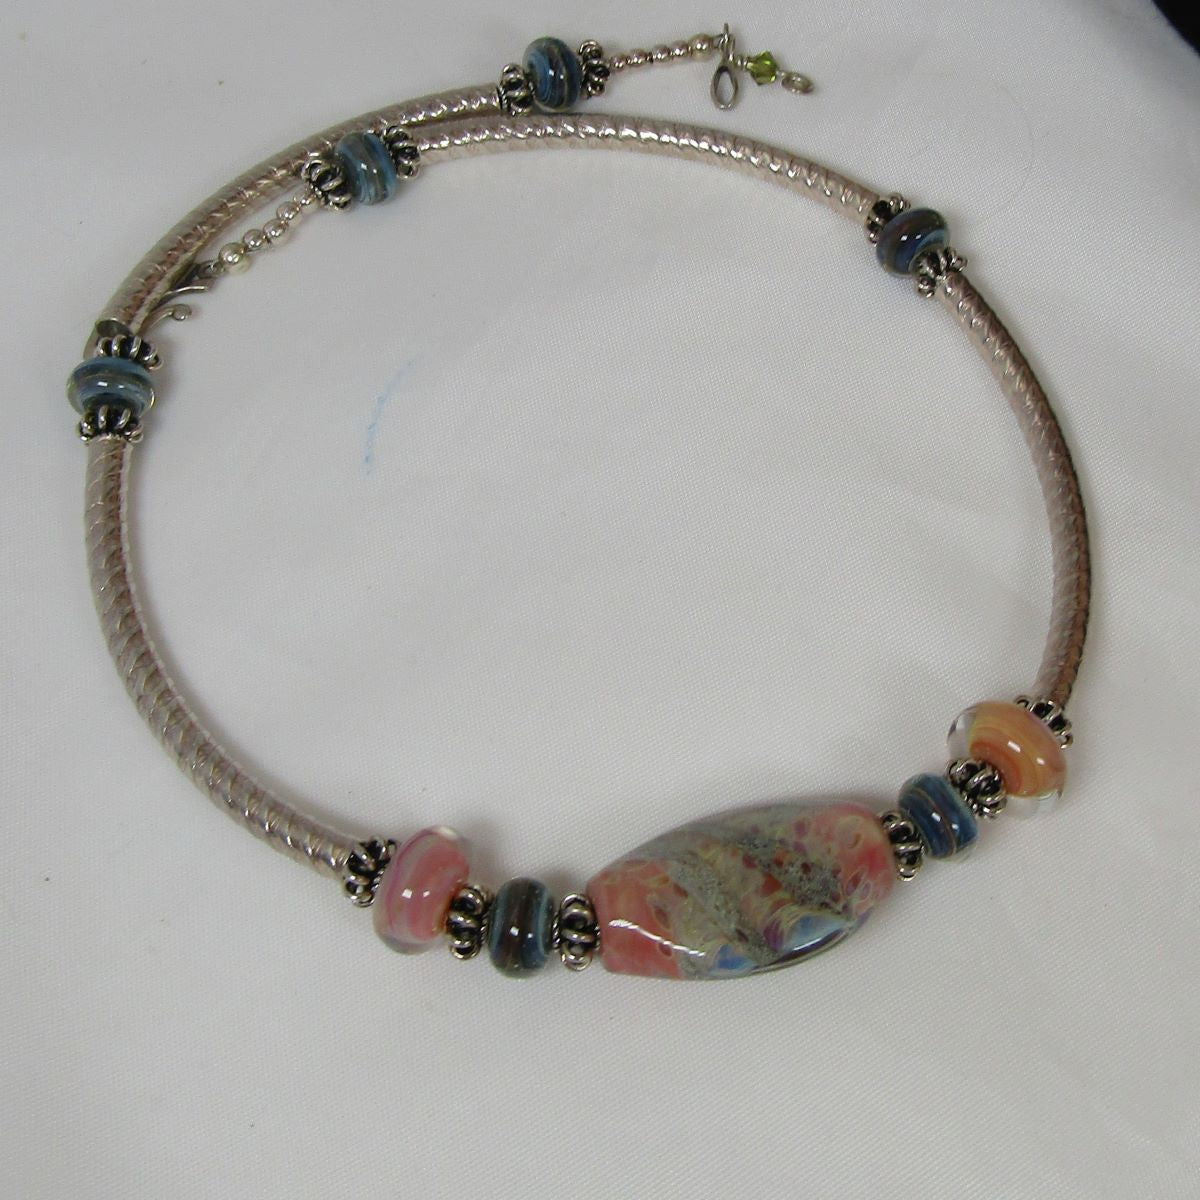 Handmade Artisan Bead Necklace in Peach & Green - VP's Jewelry  